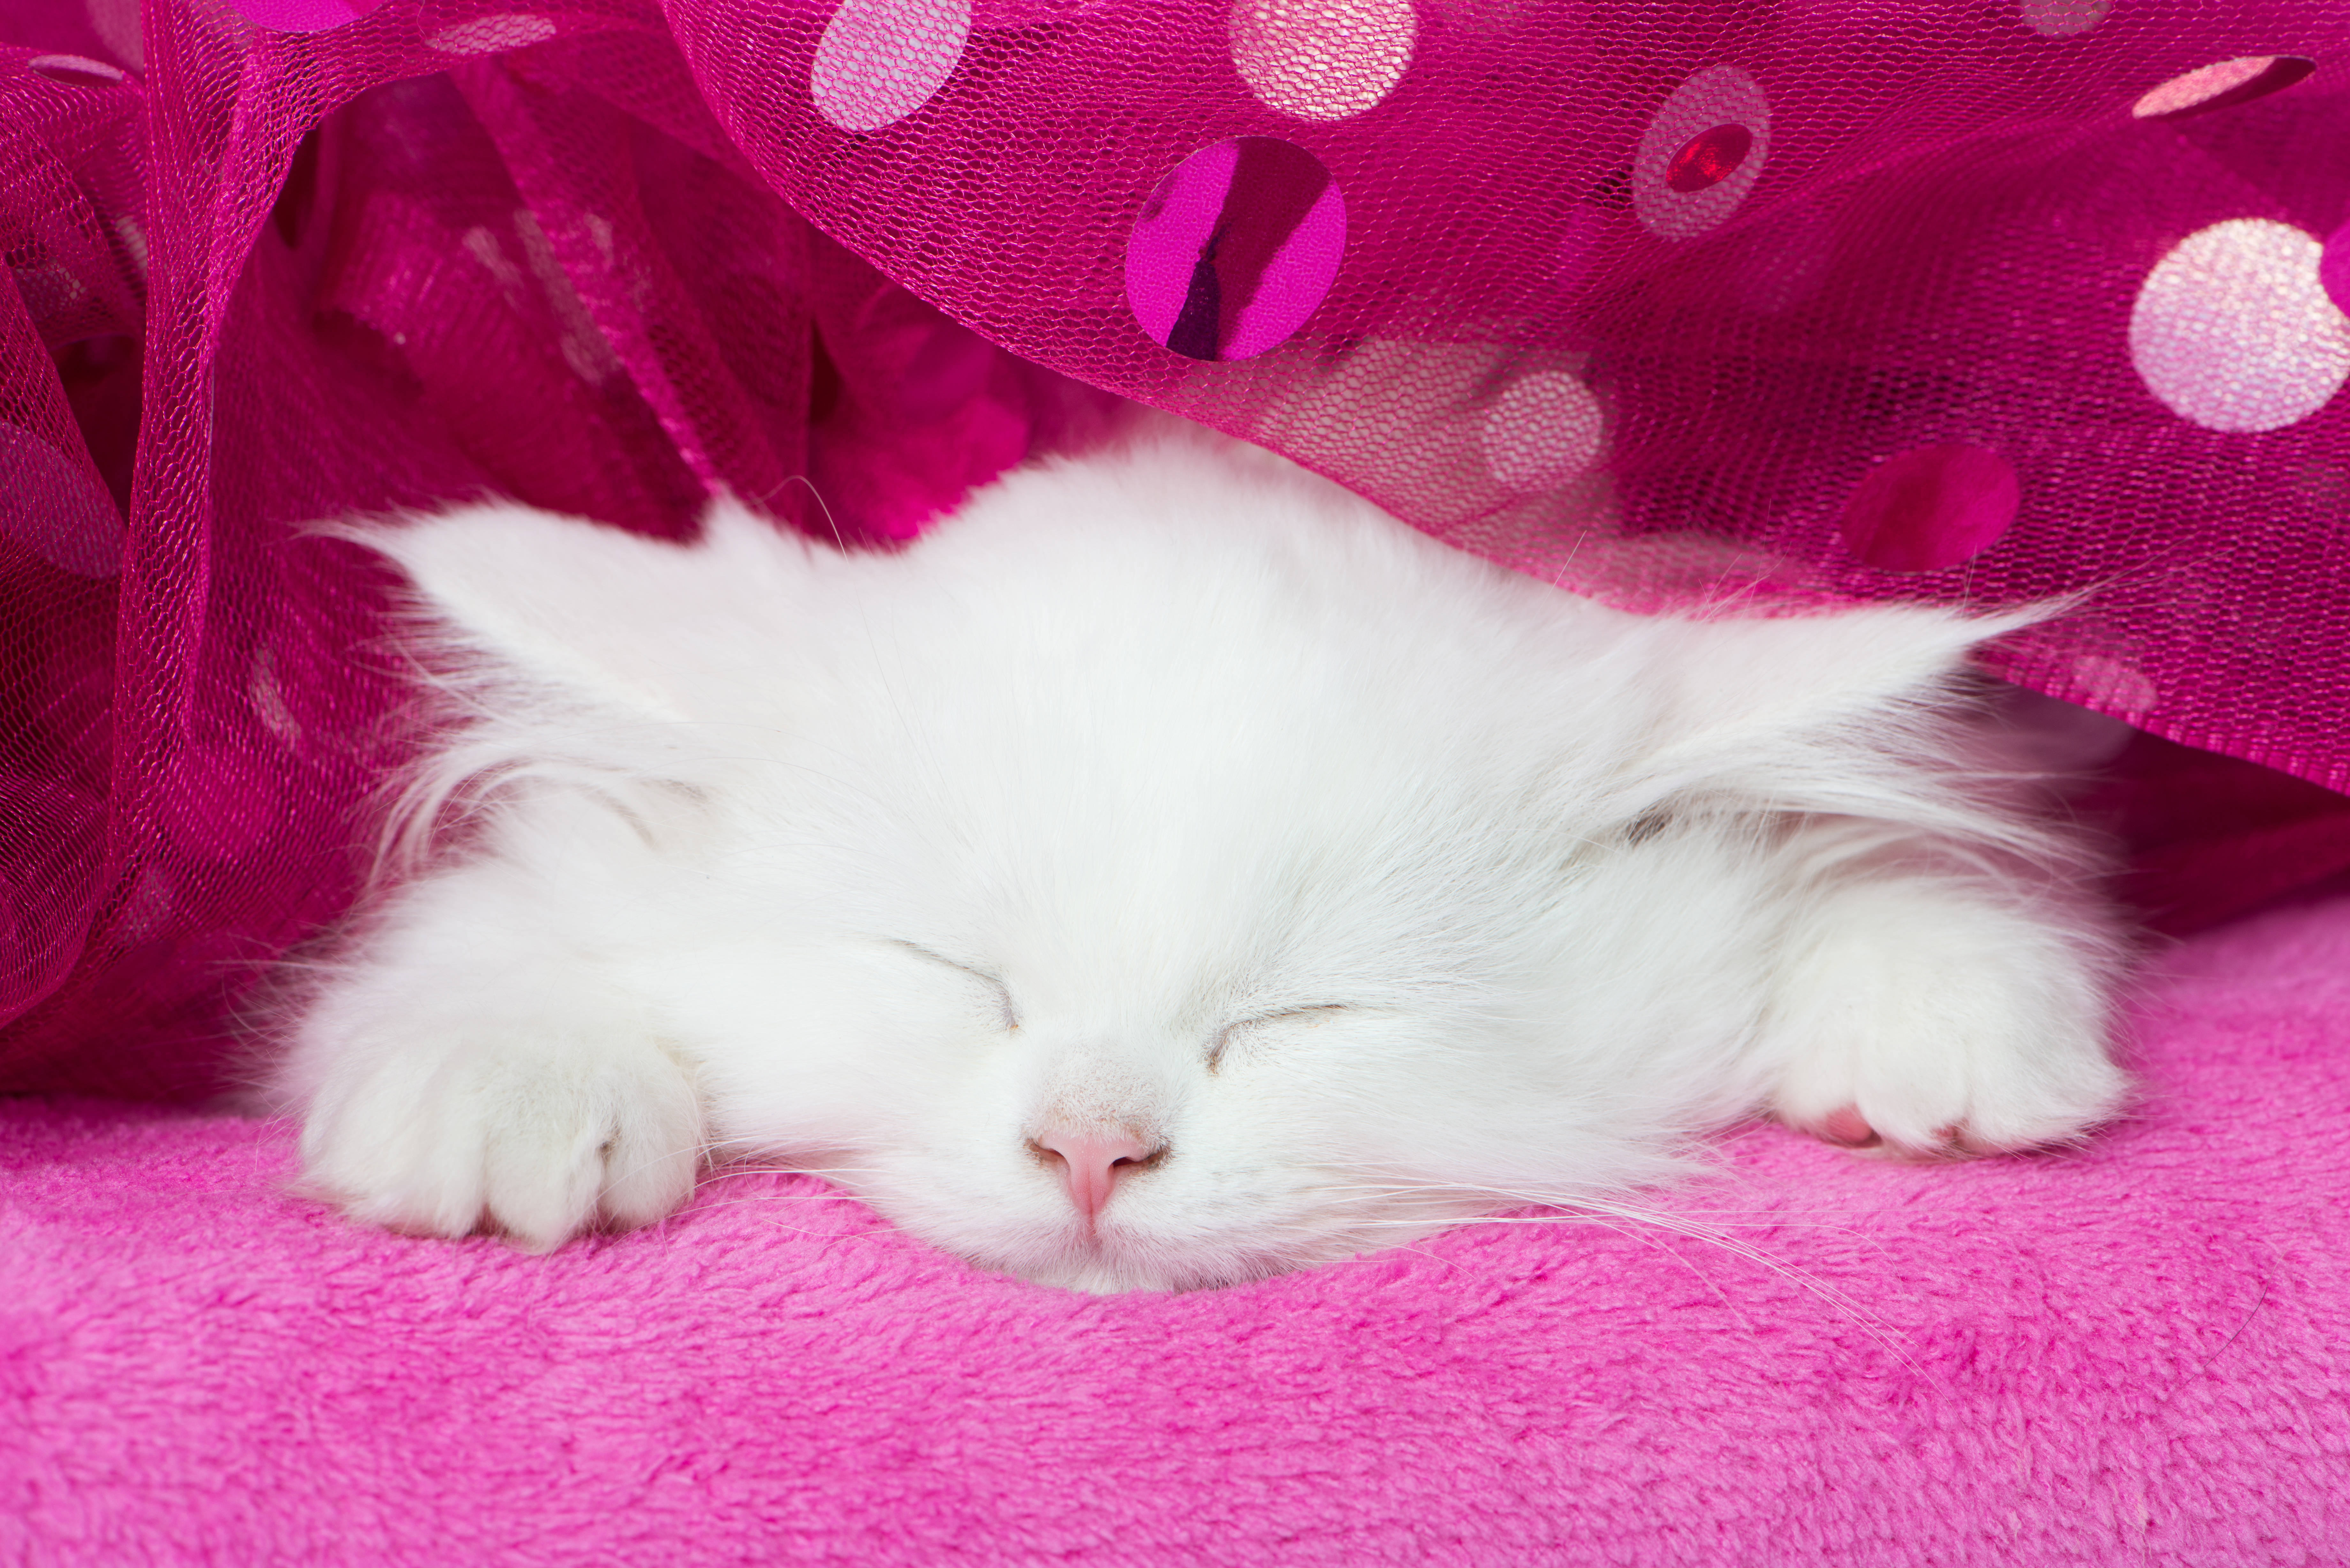 Free download wallpaper Cats, Cat, Animal, Sleeping on your PC desktop